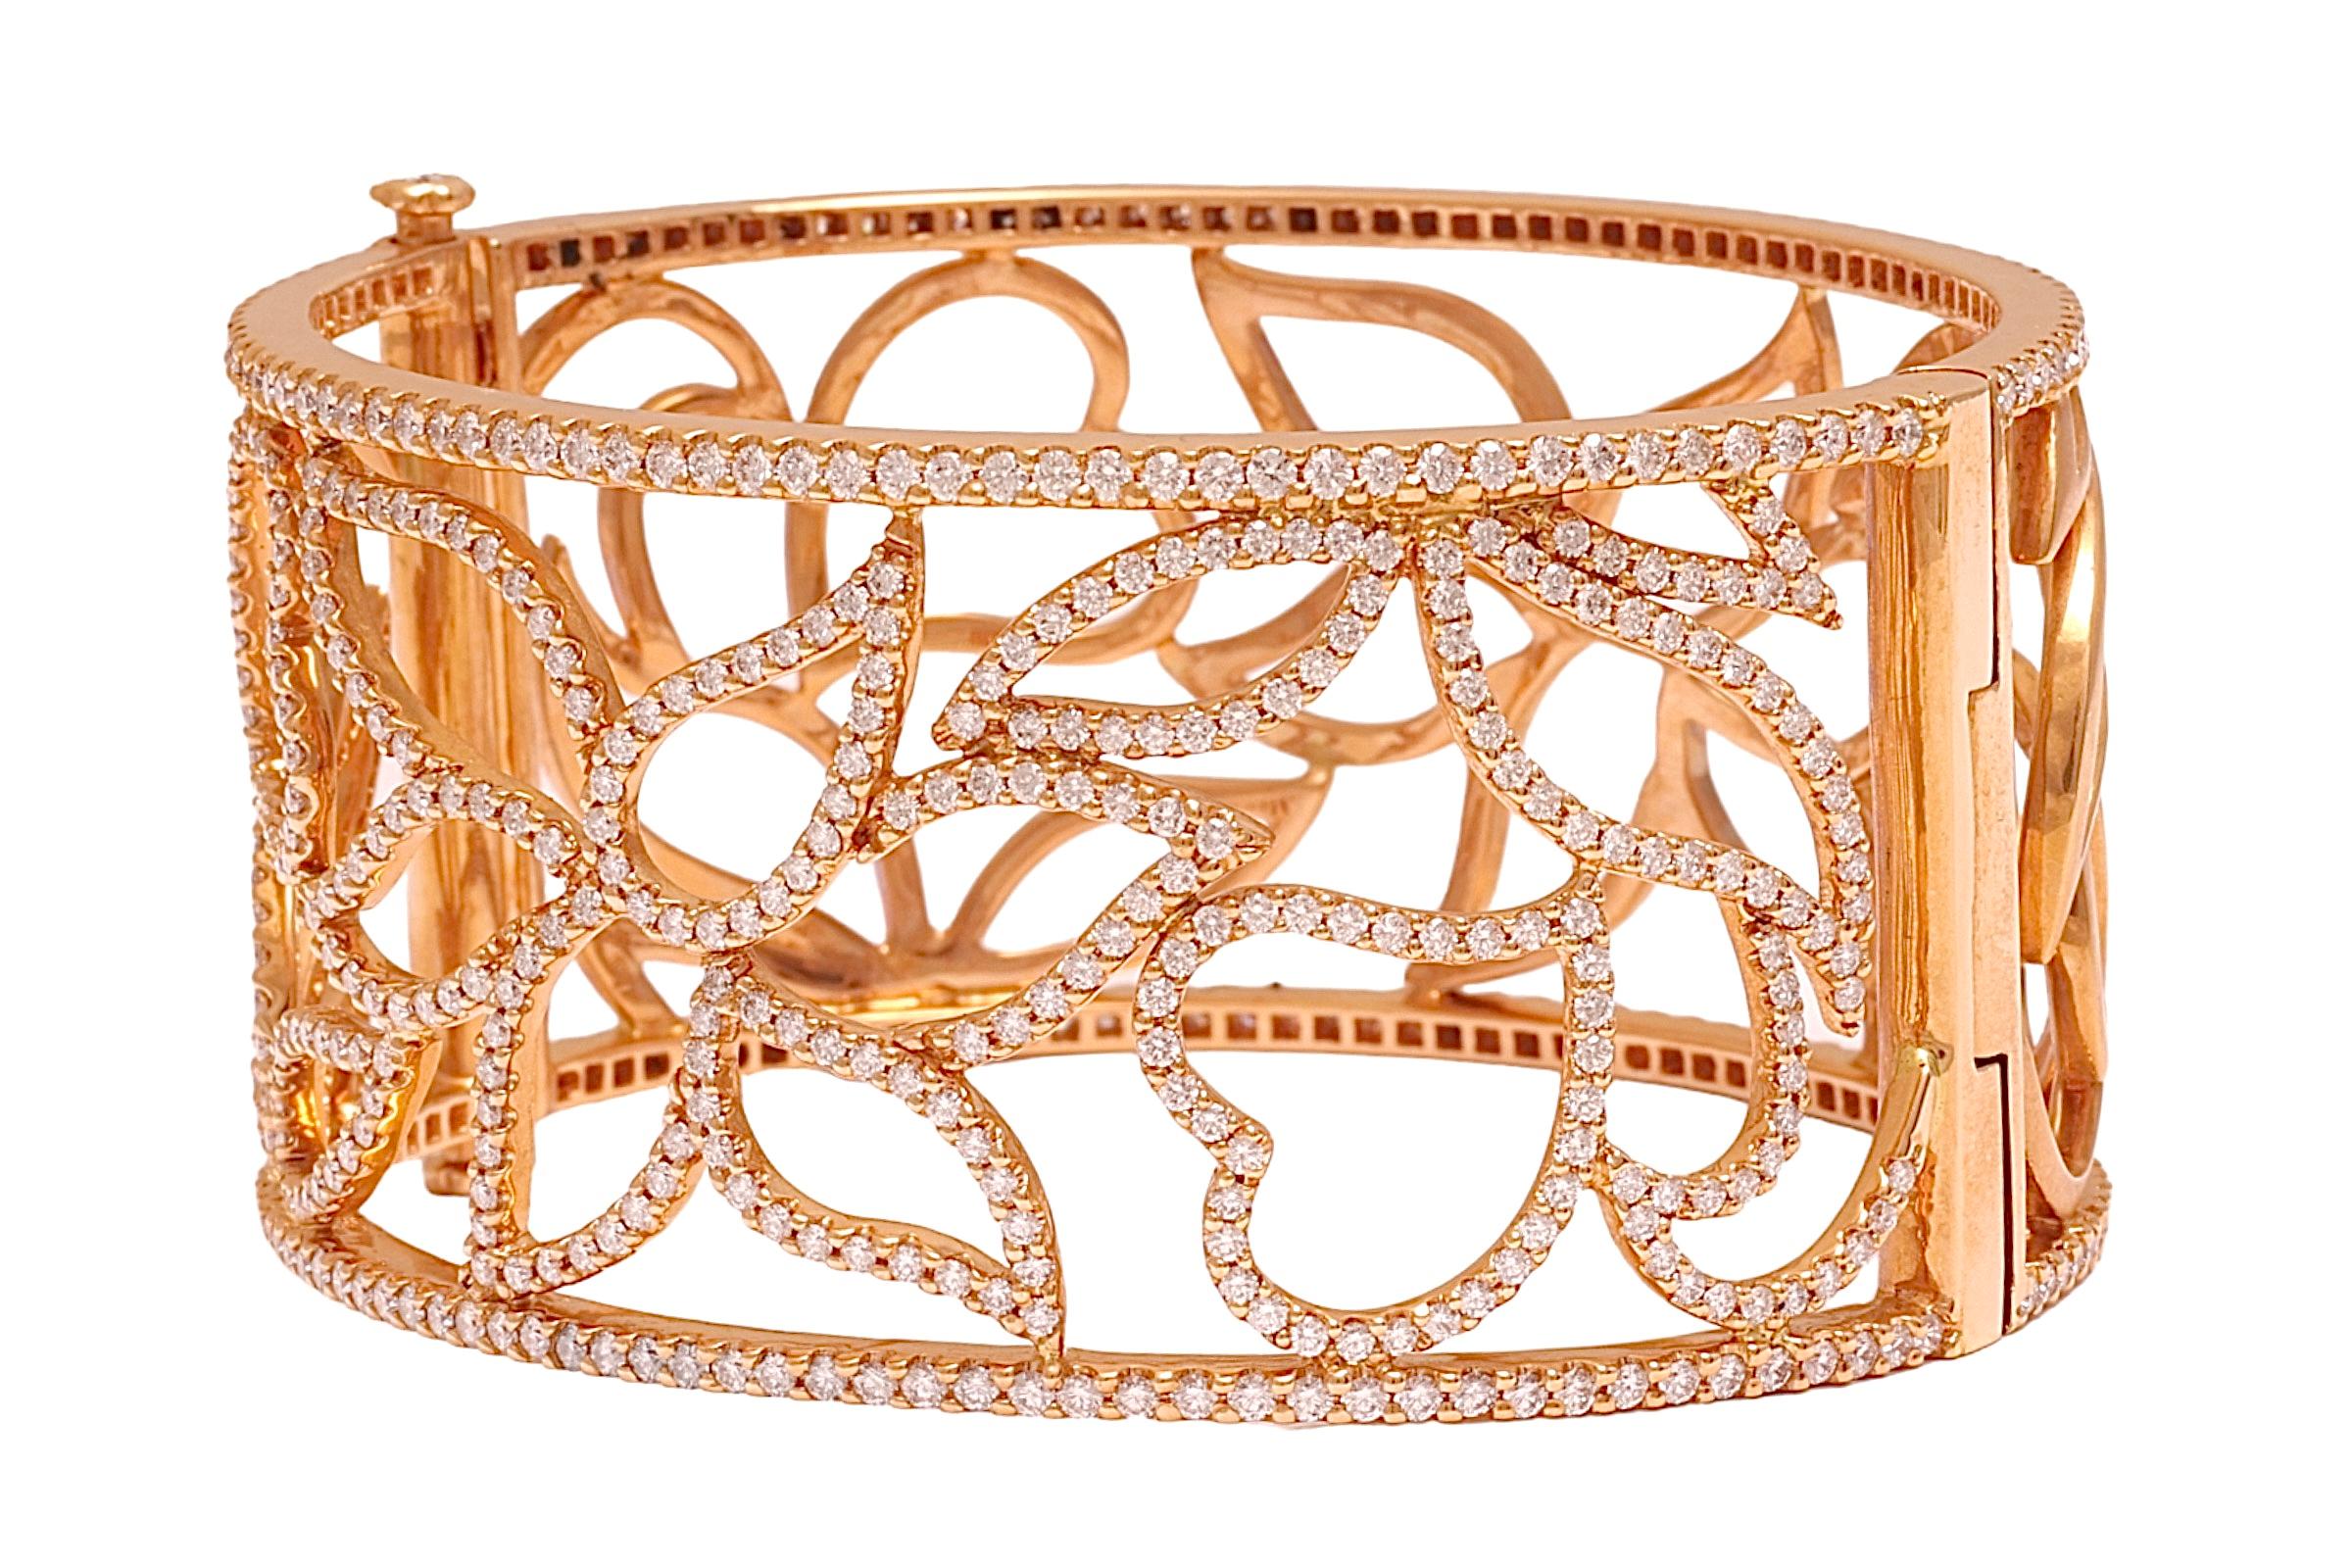 18kt Pink Gold Cuff Bracelet, Flower Design, set with 5.87 ct. Diamonds, 2 Sided For Sale 2